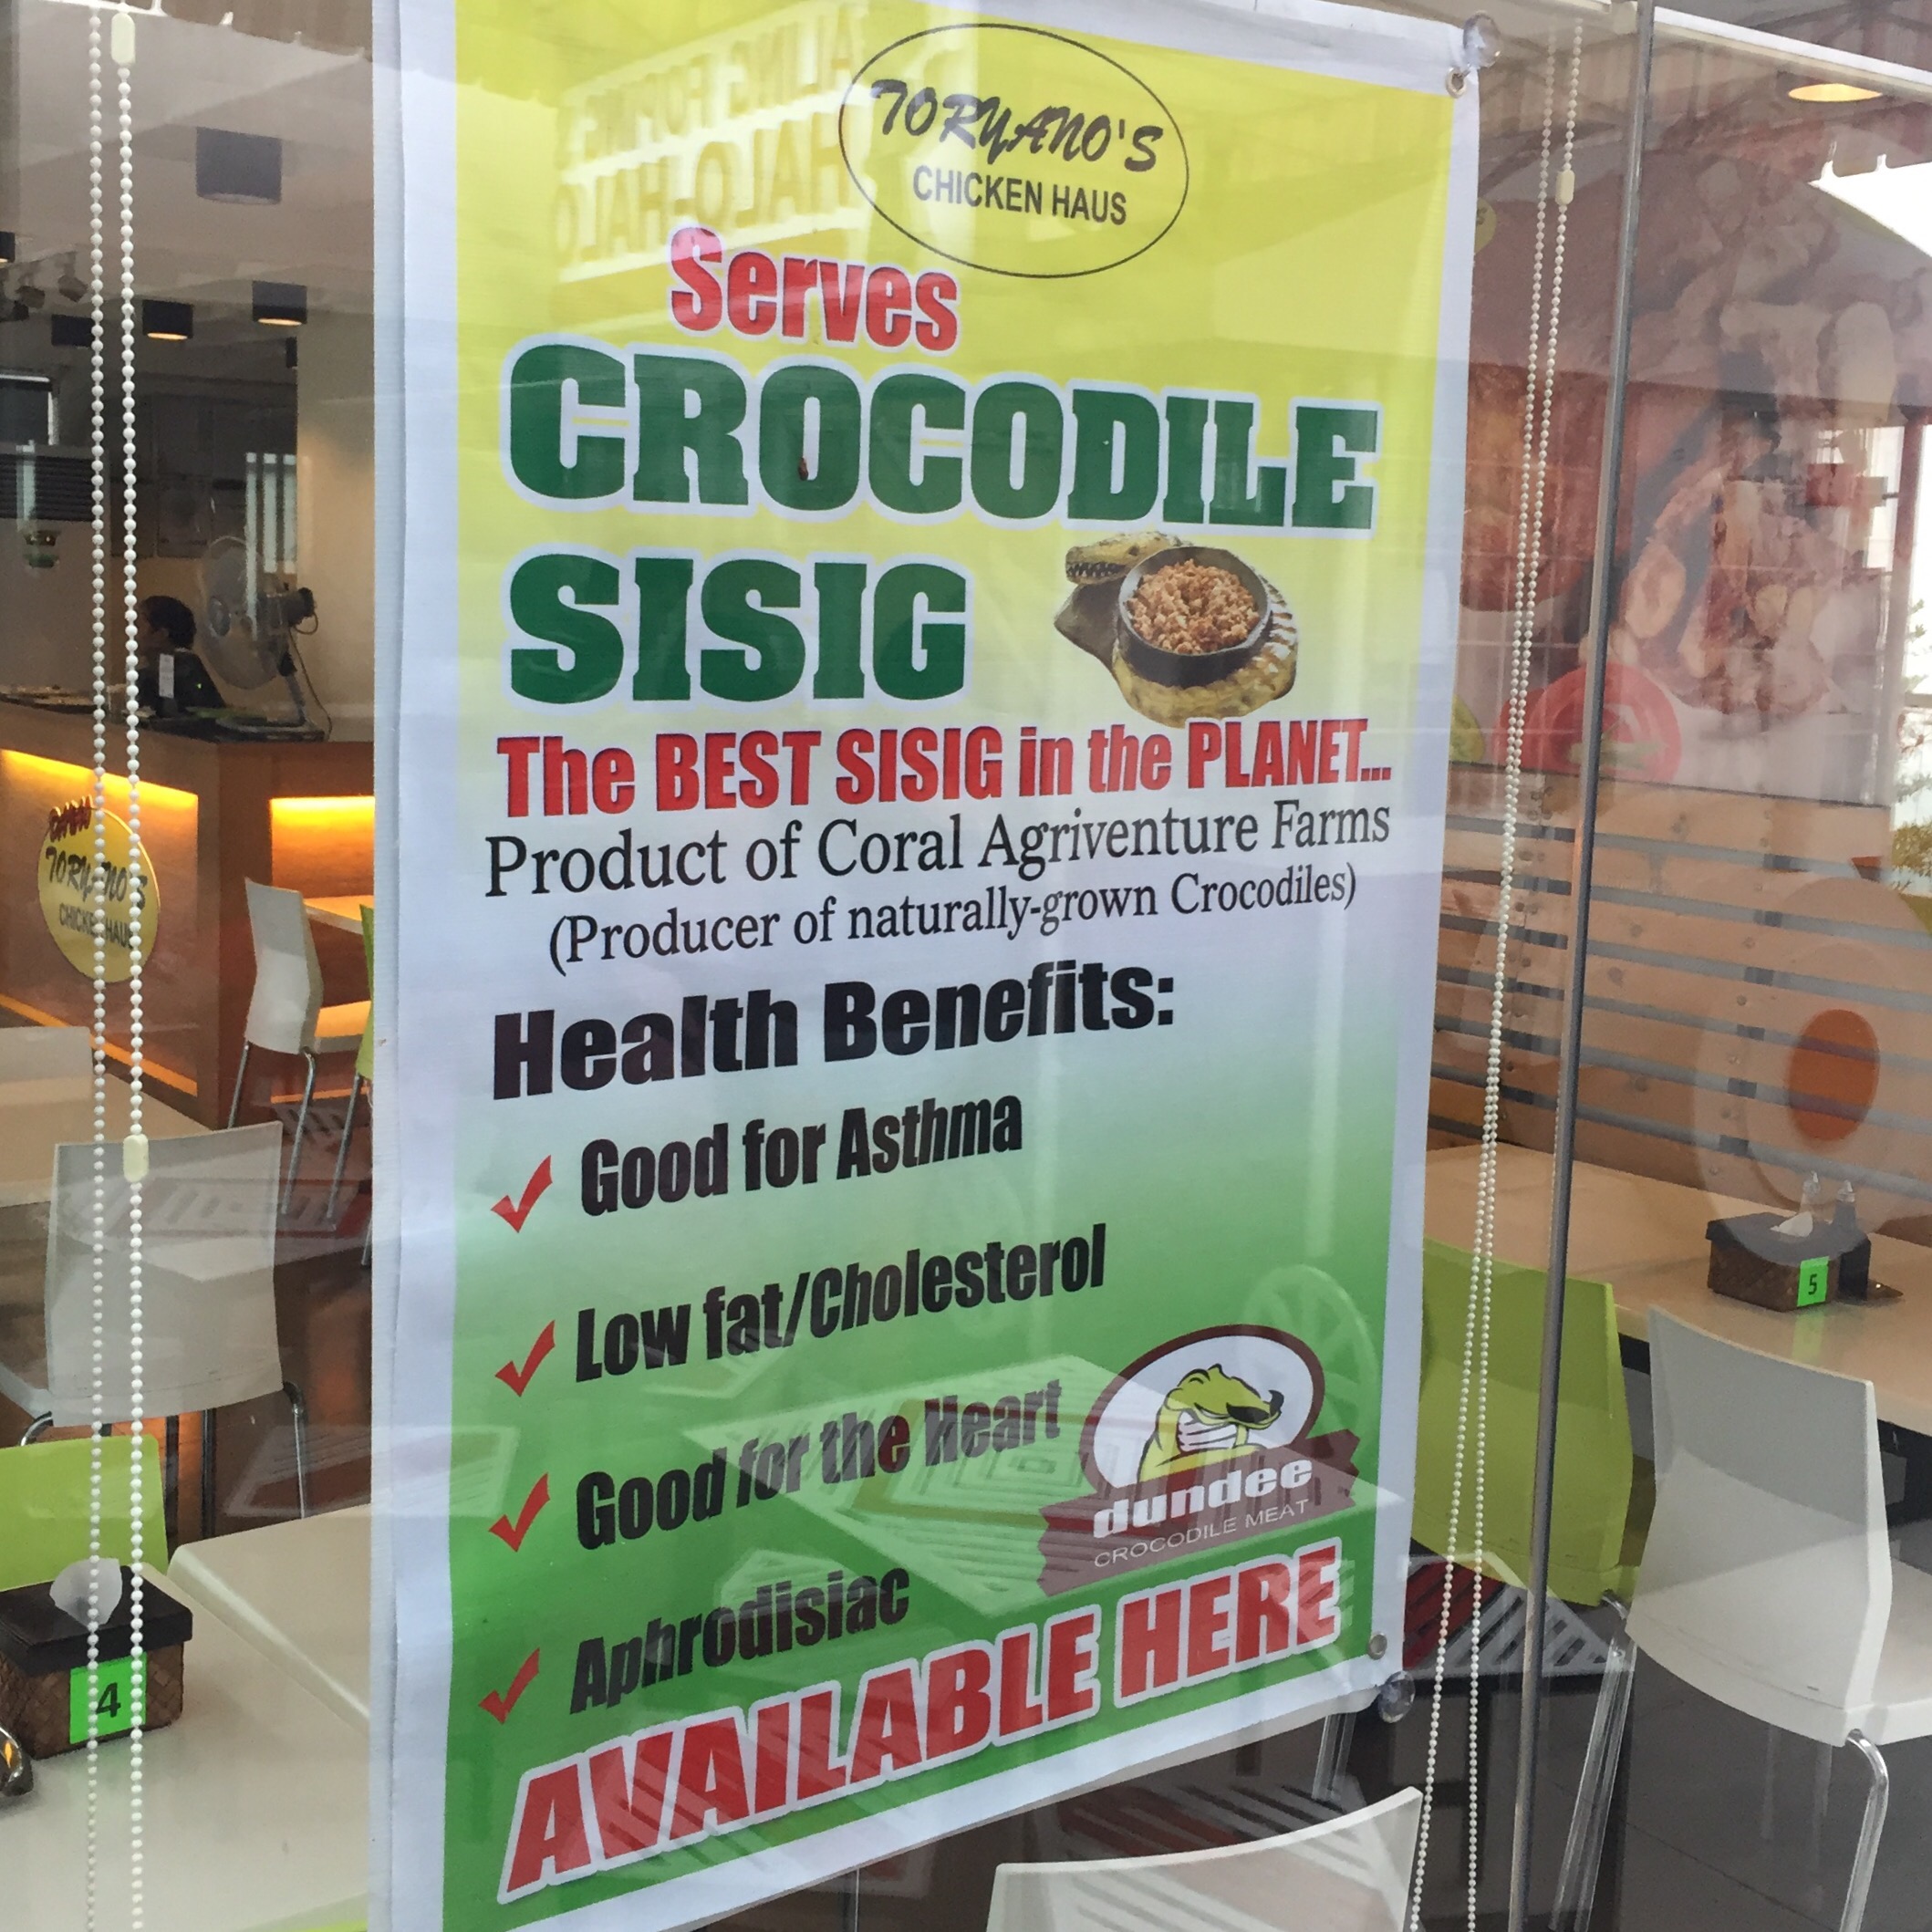 Crocodile Sisig Spotted at Toryano’s Chicken Haus